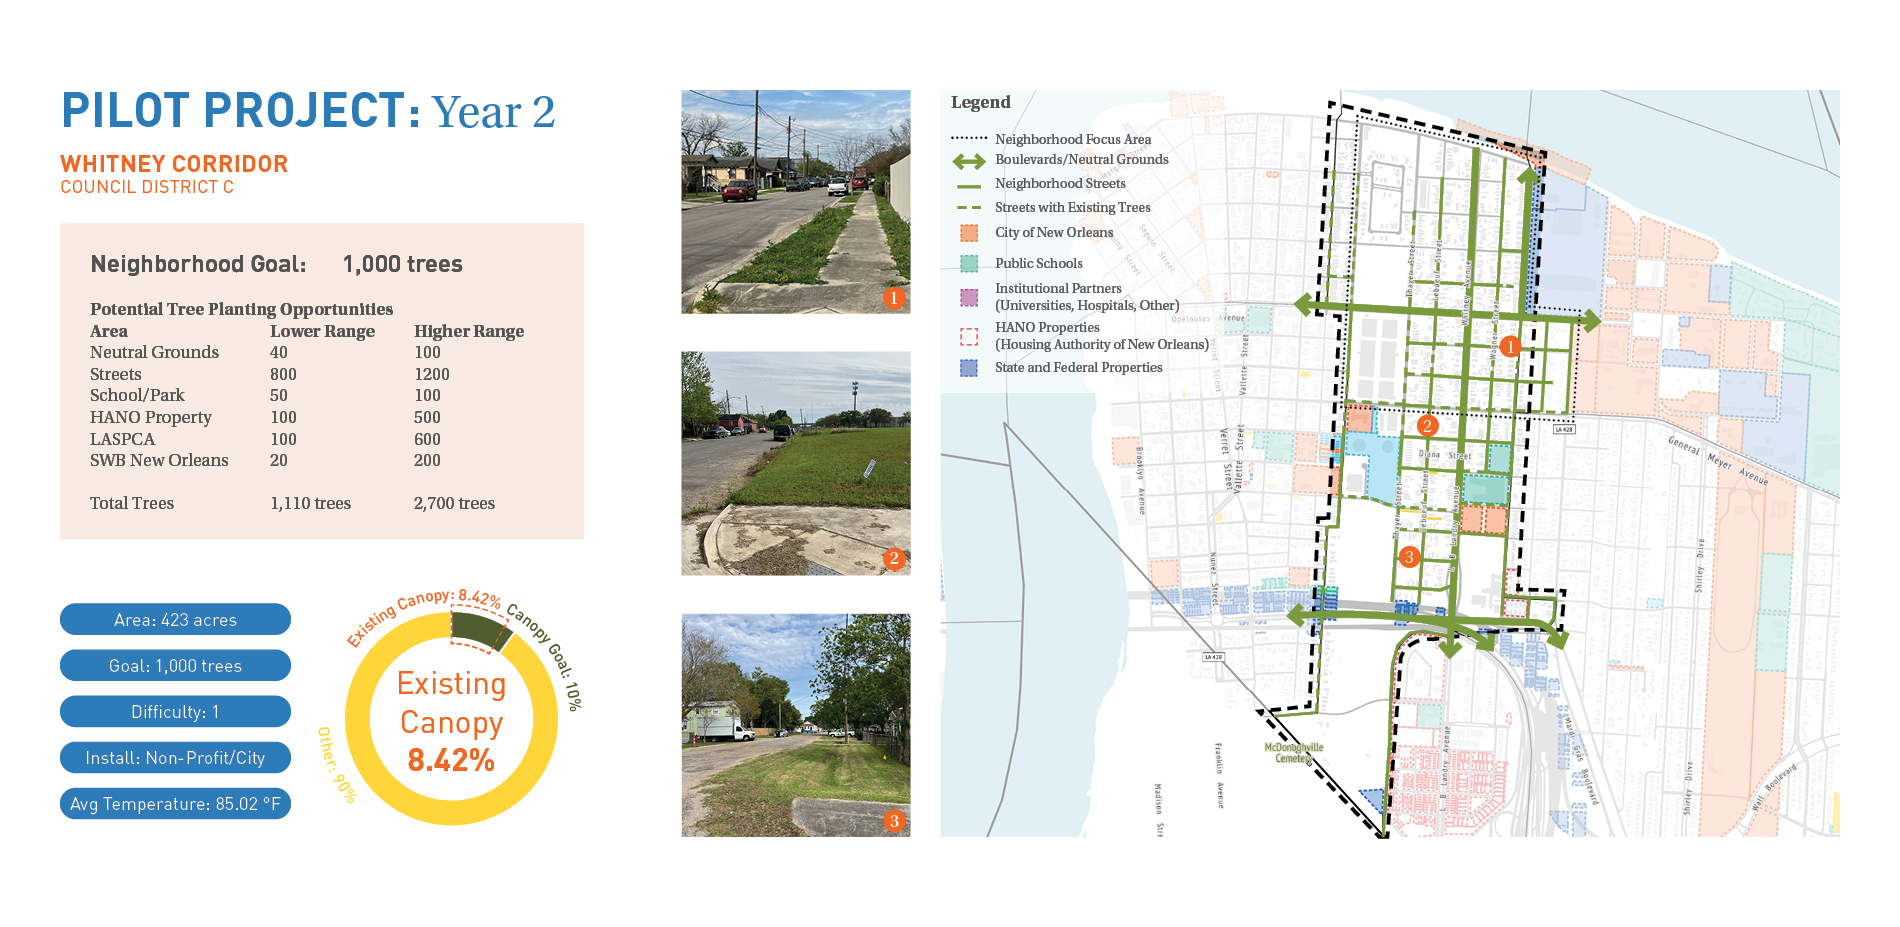 Pilot Project Overview: Whitney Corridor Neighborhood